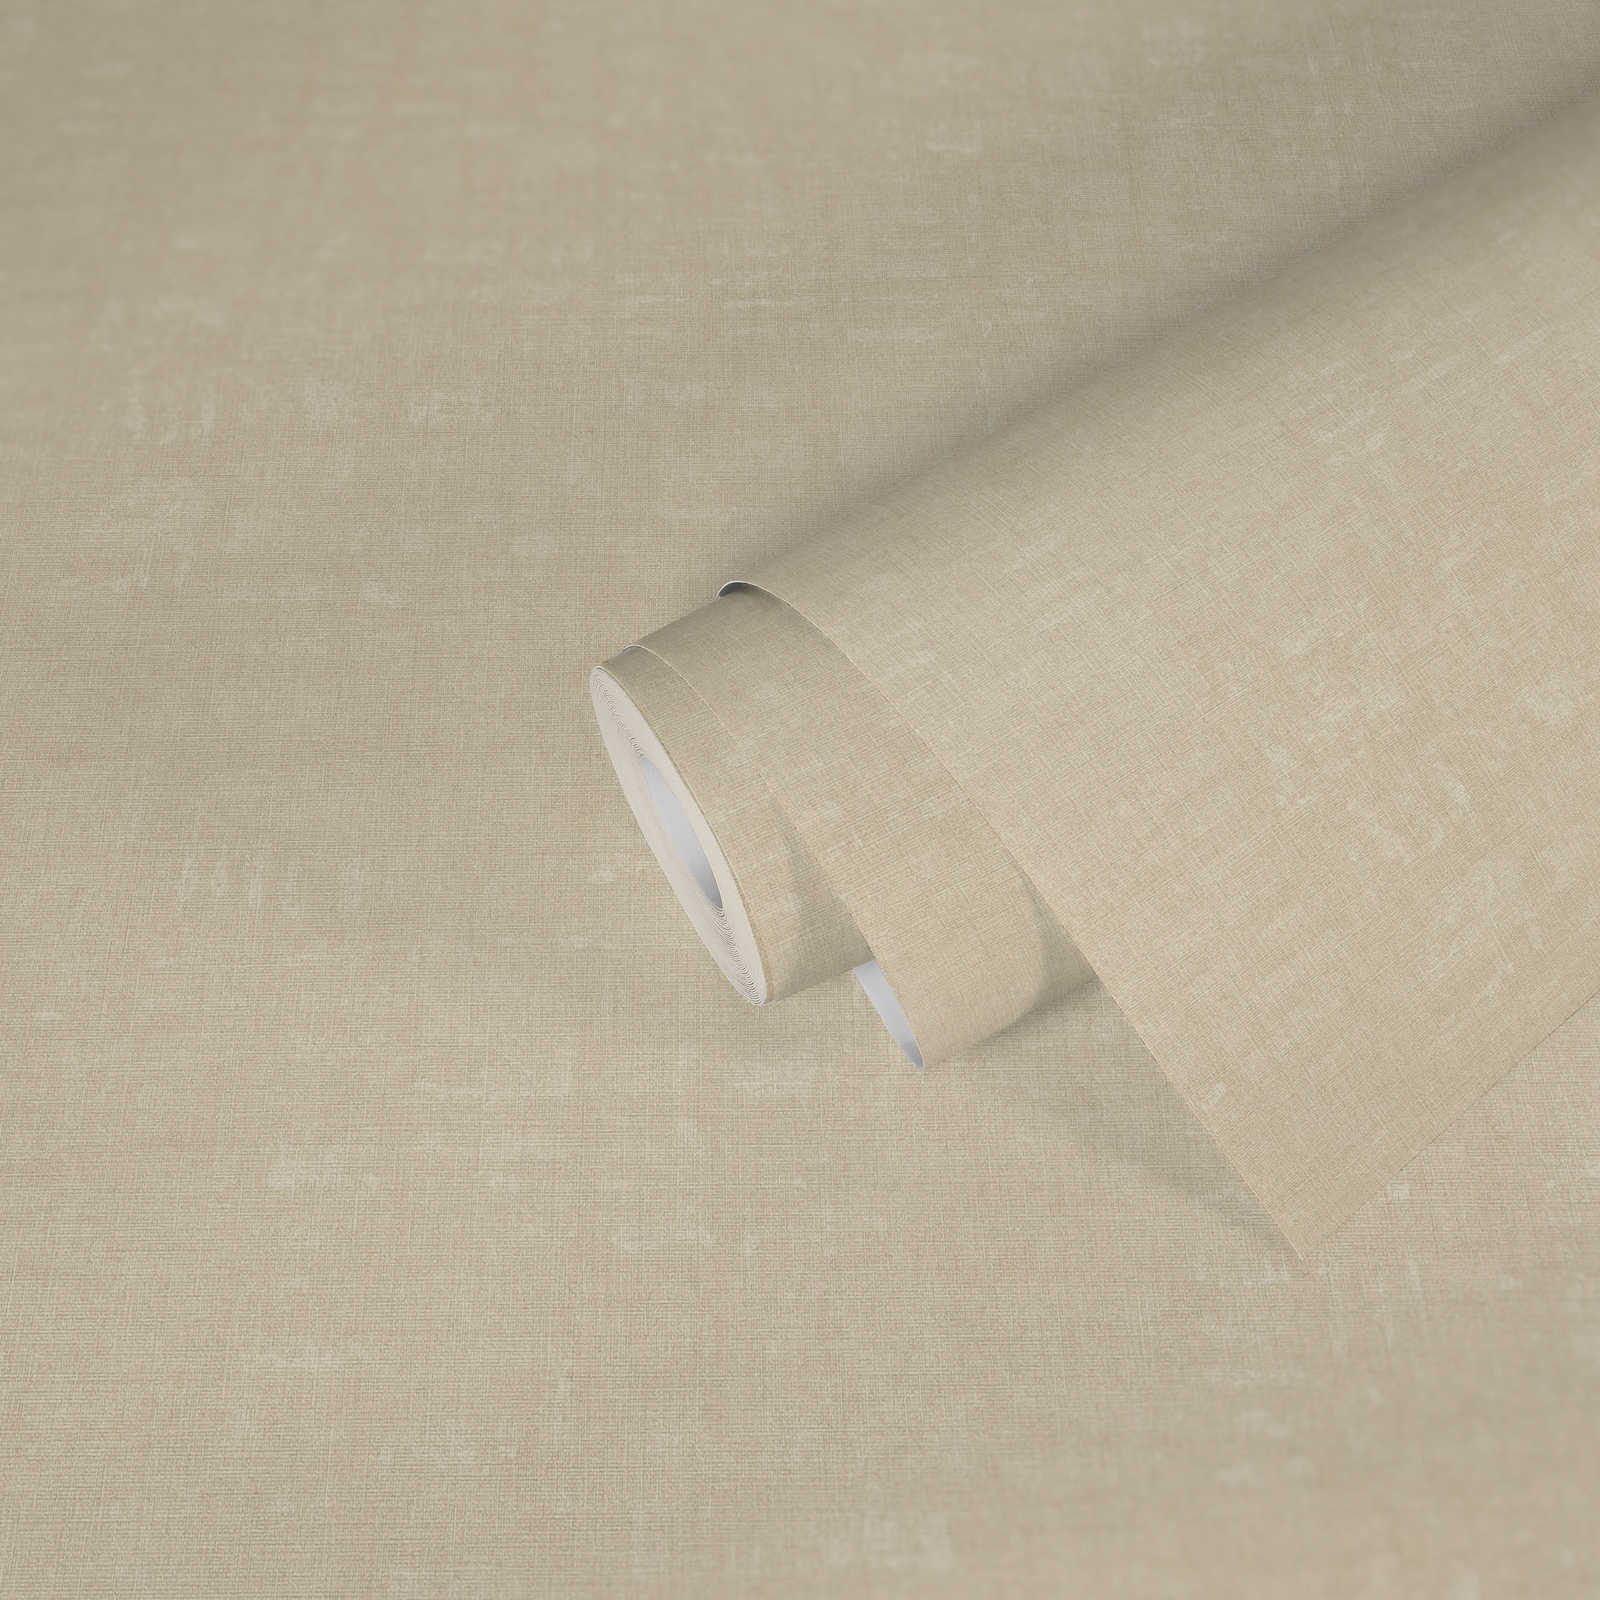             Plain wallpaper with mottled pattern - cream, beige
        